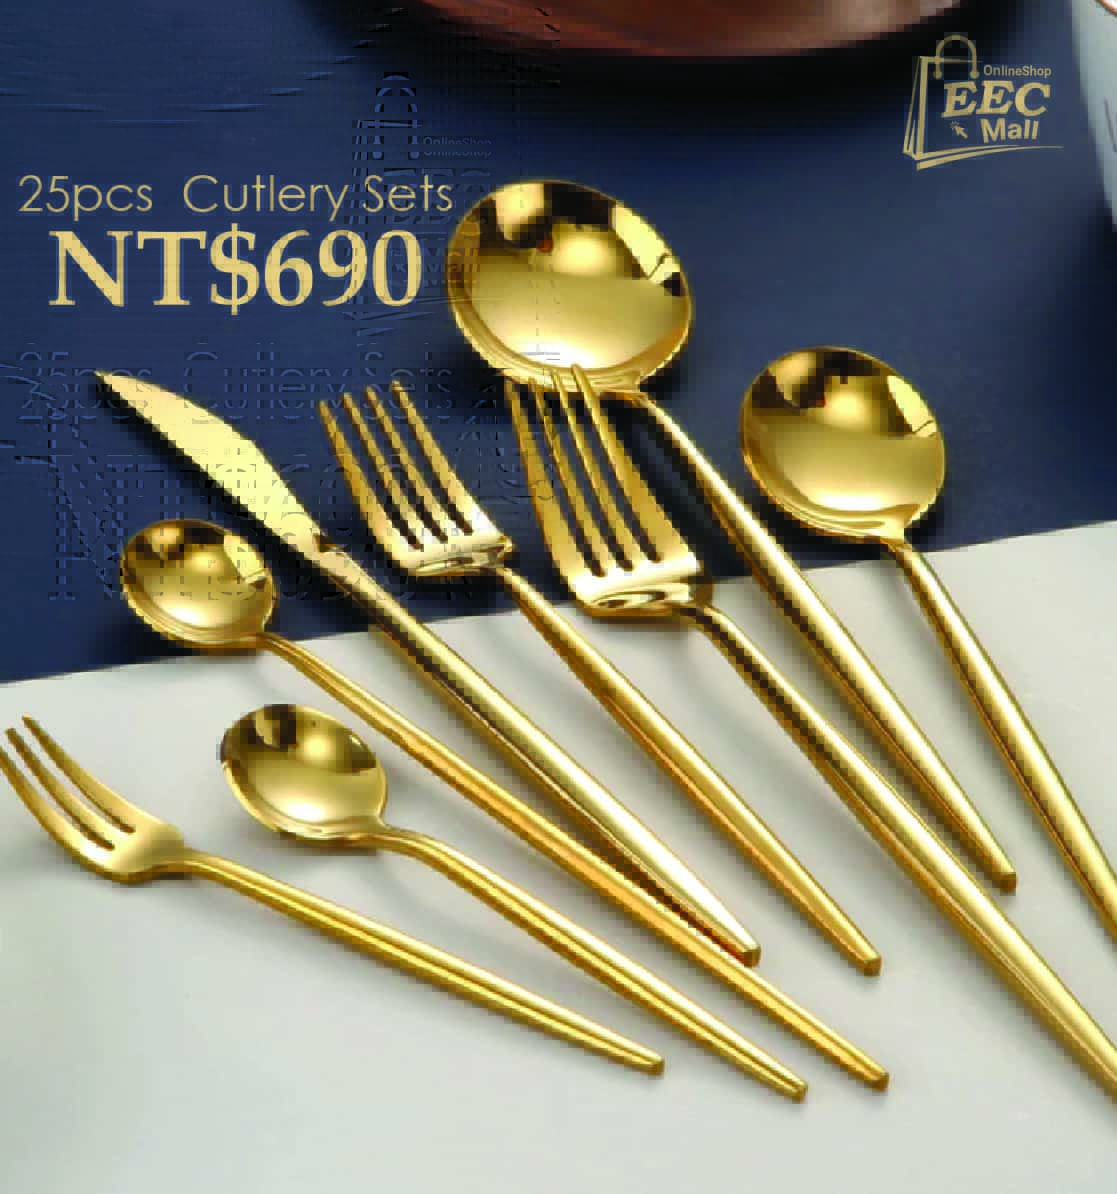 25 Pcs Cutlery Sets